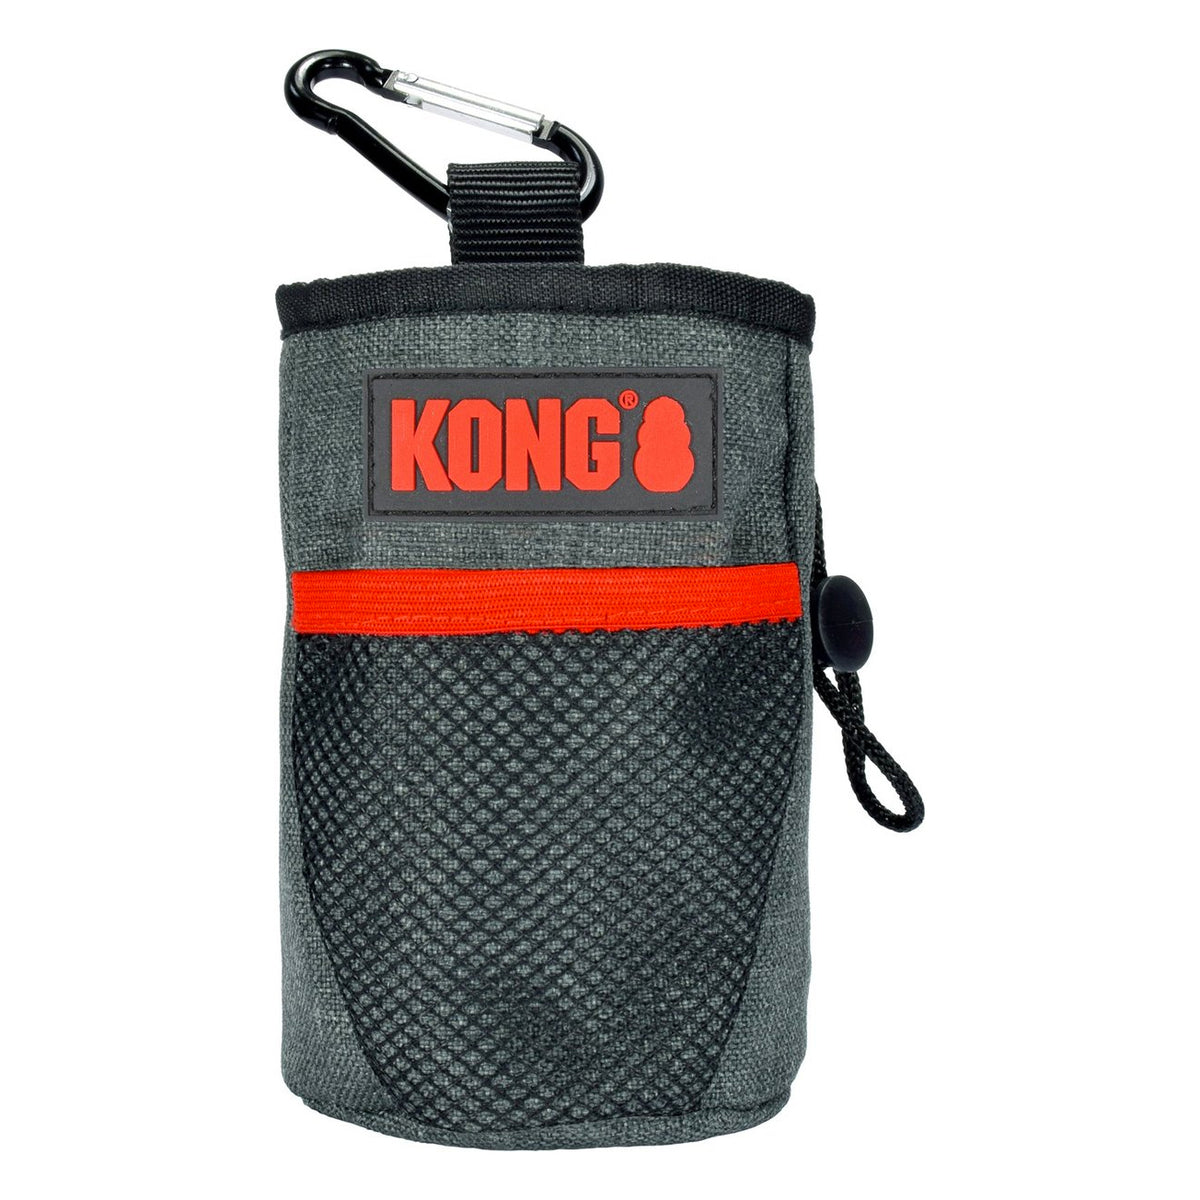 KONG Travel Treat Bag